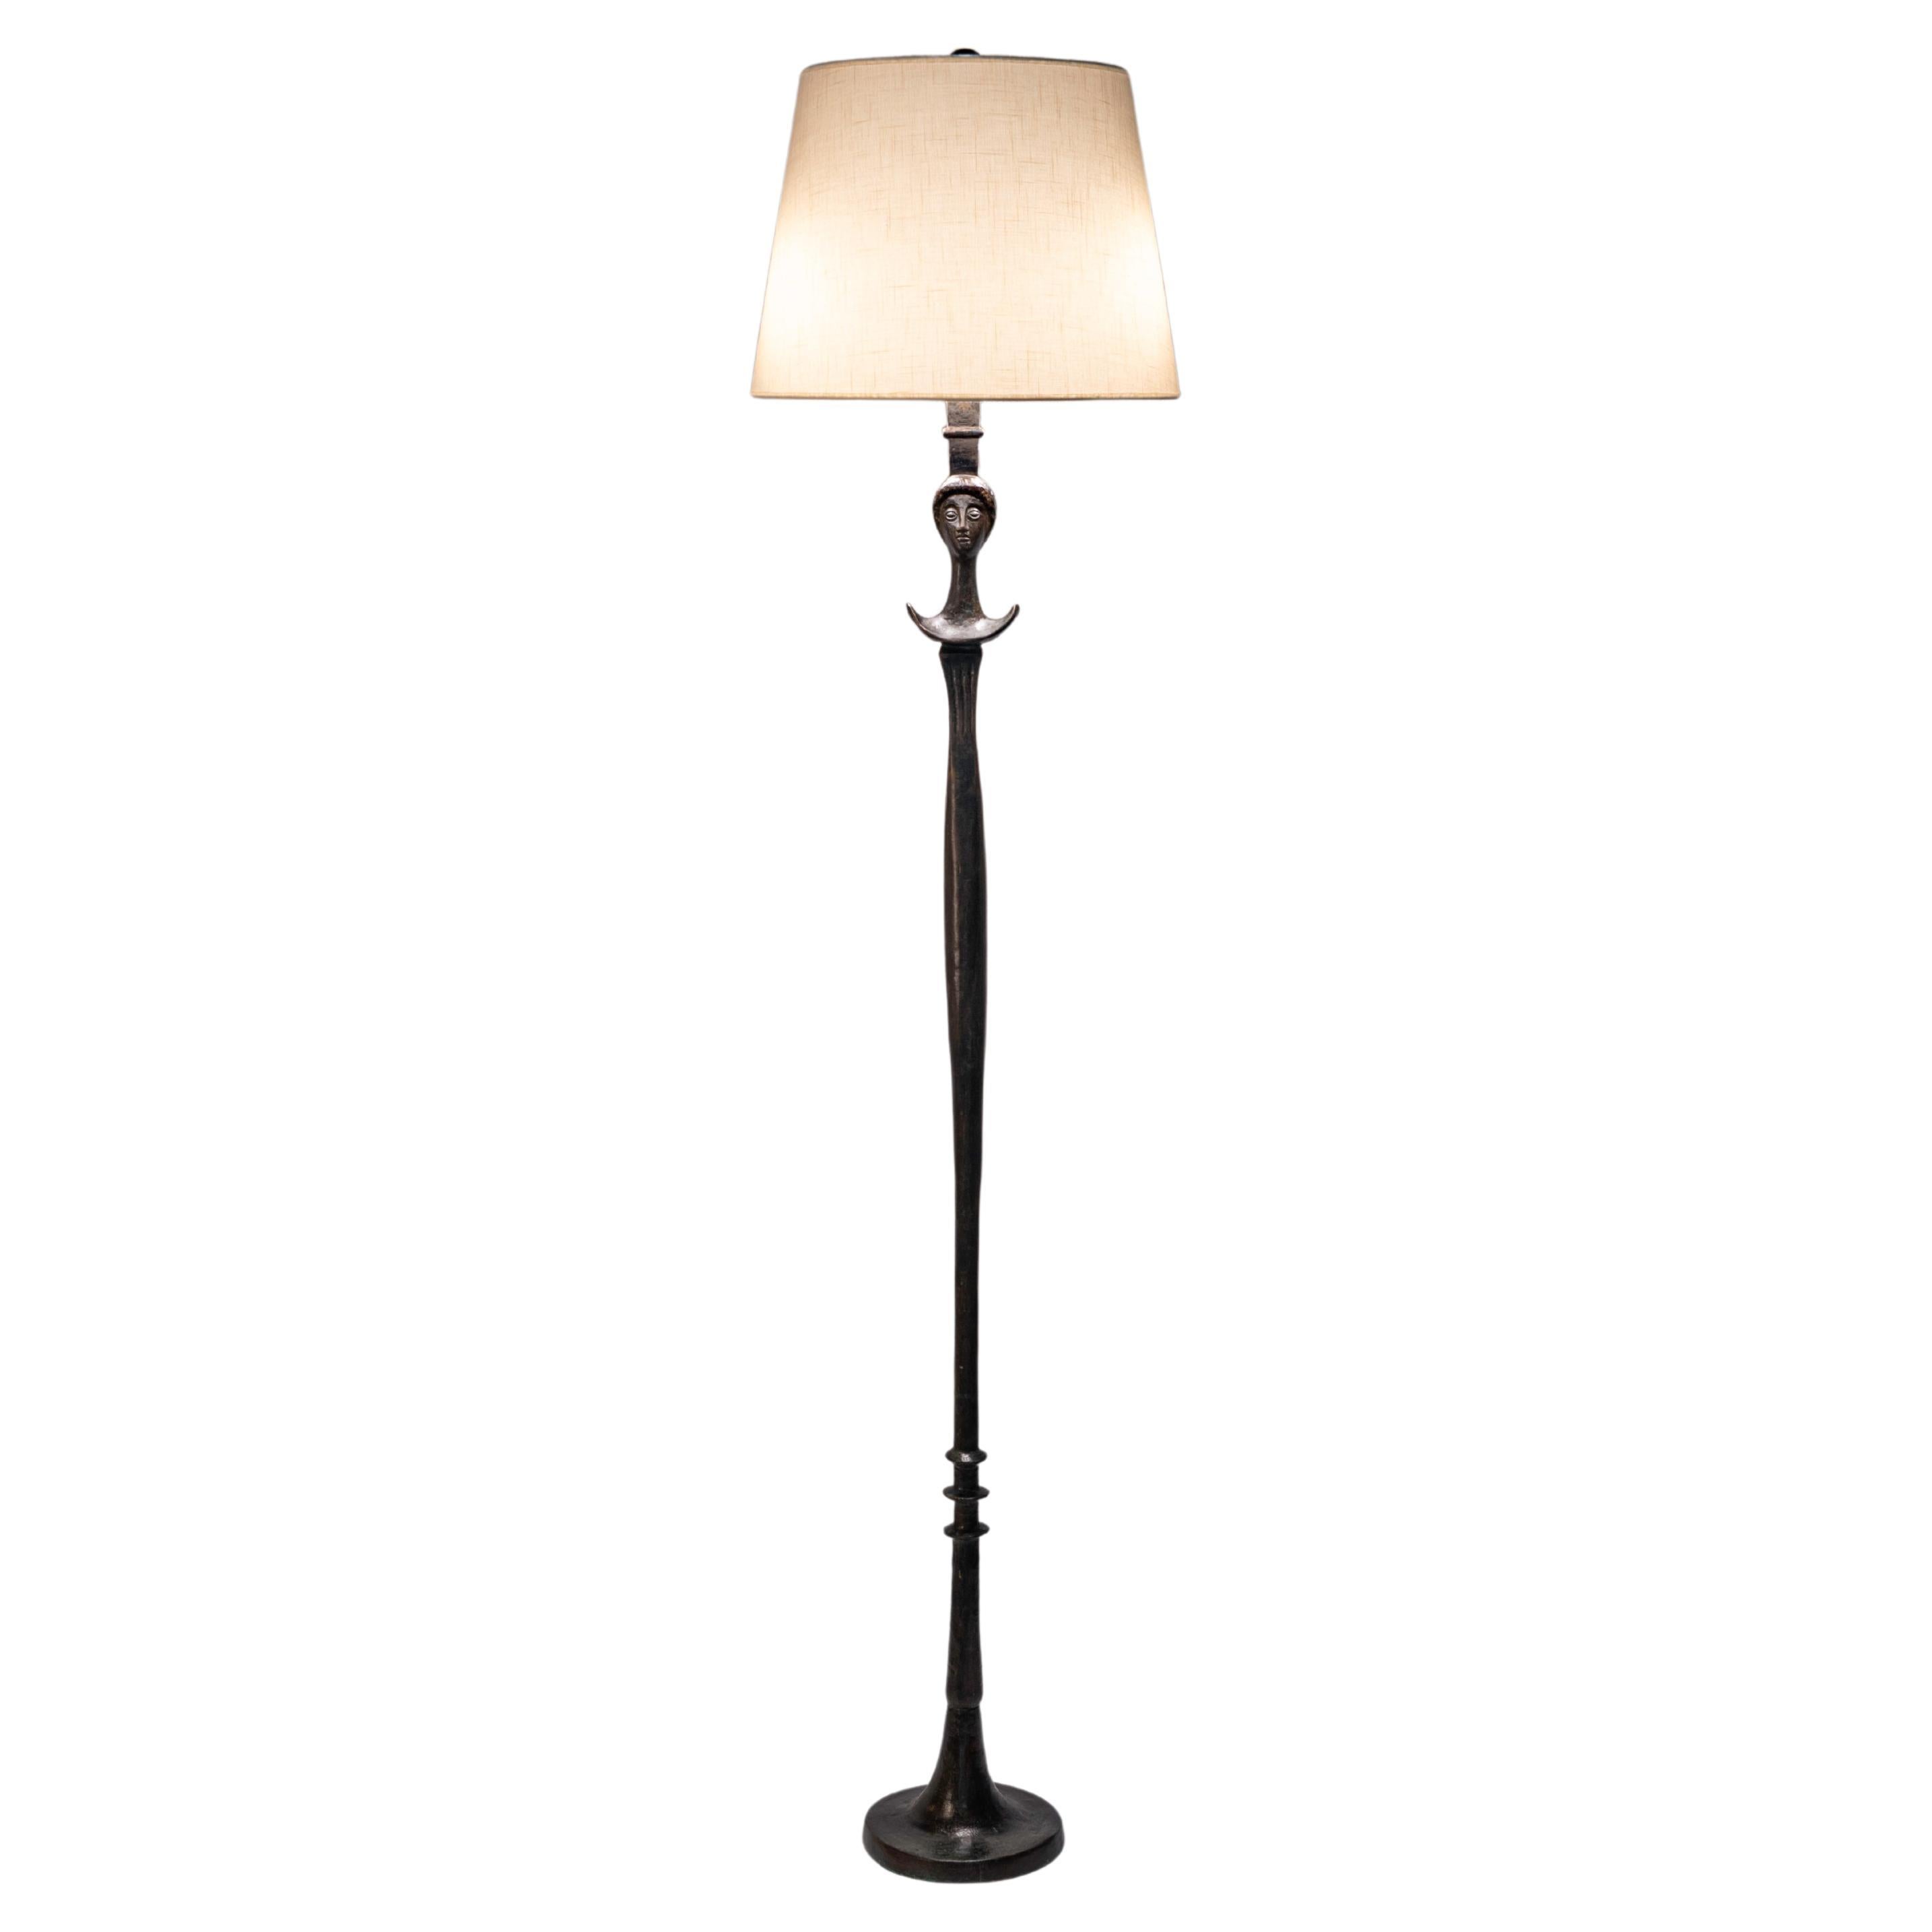 Tete de femme floor lamp in the style of Alberto Giacometti For Sale